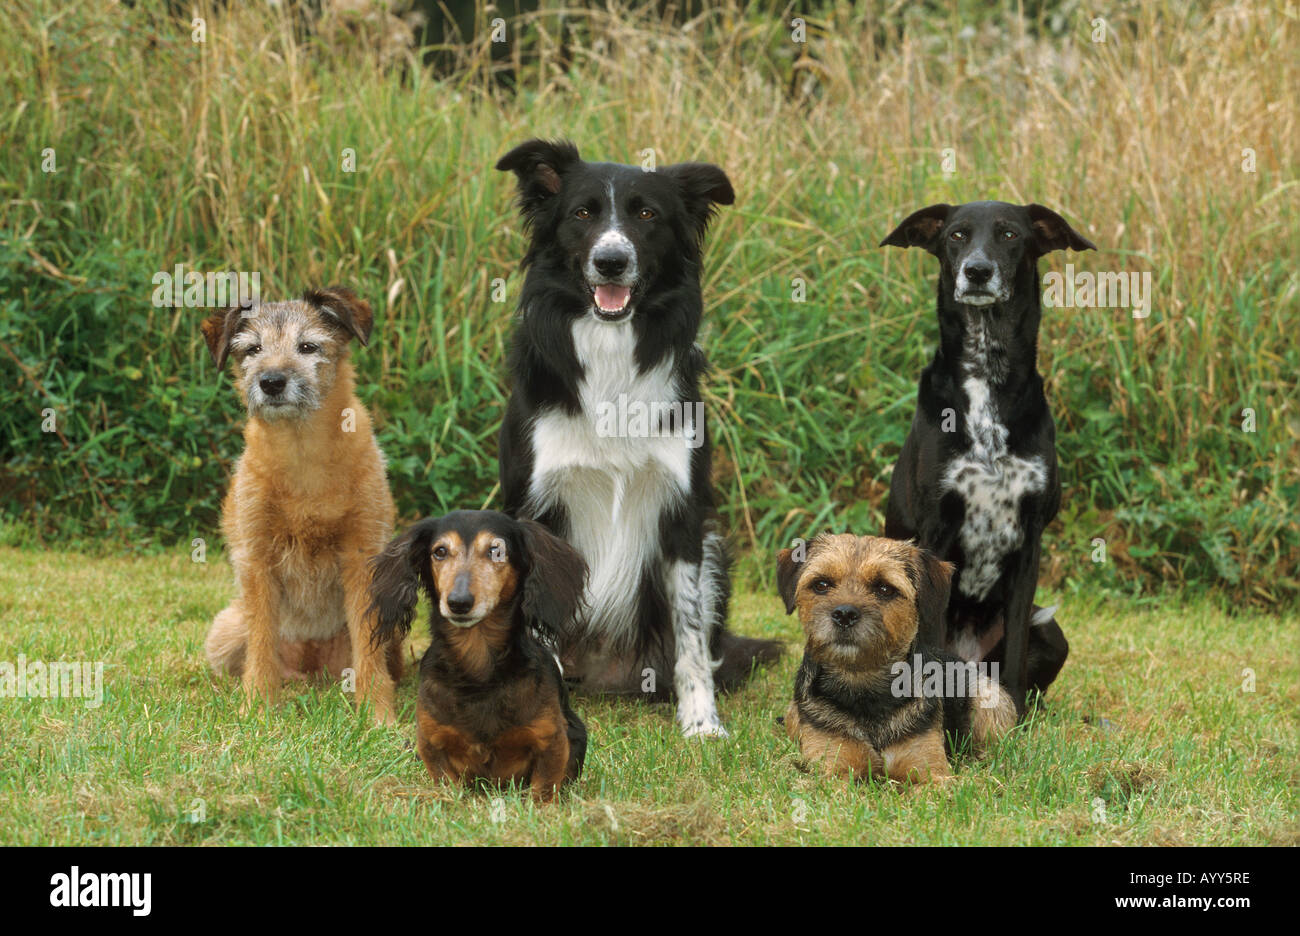 dachshund cross border collie